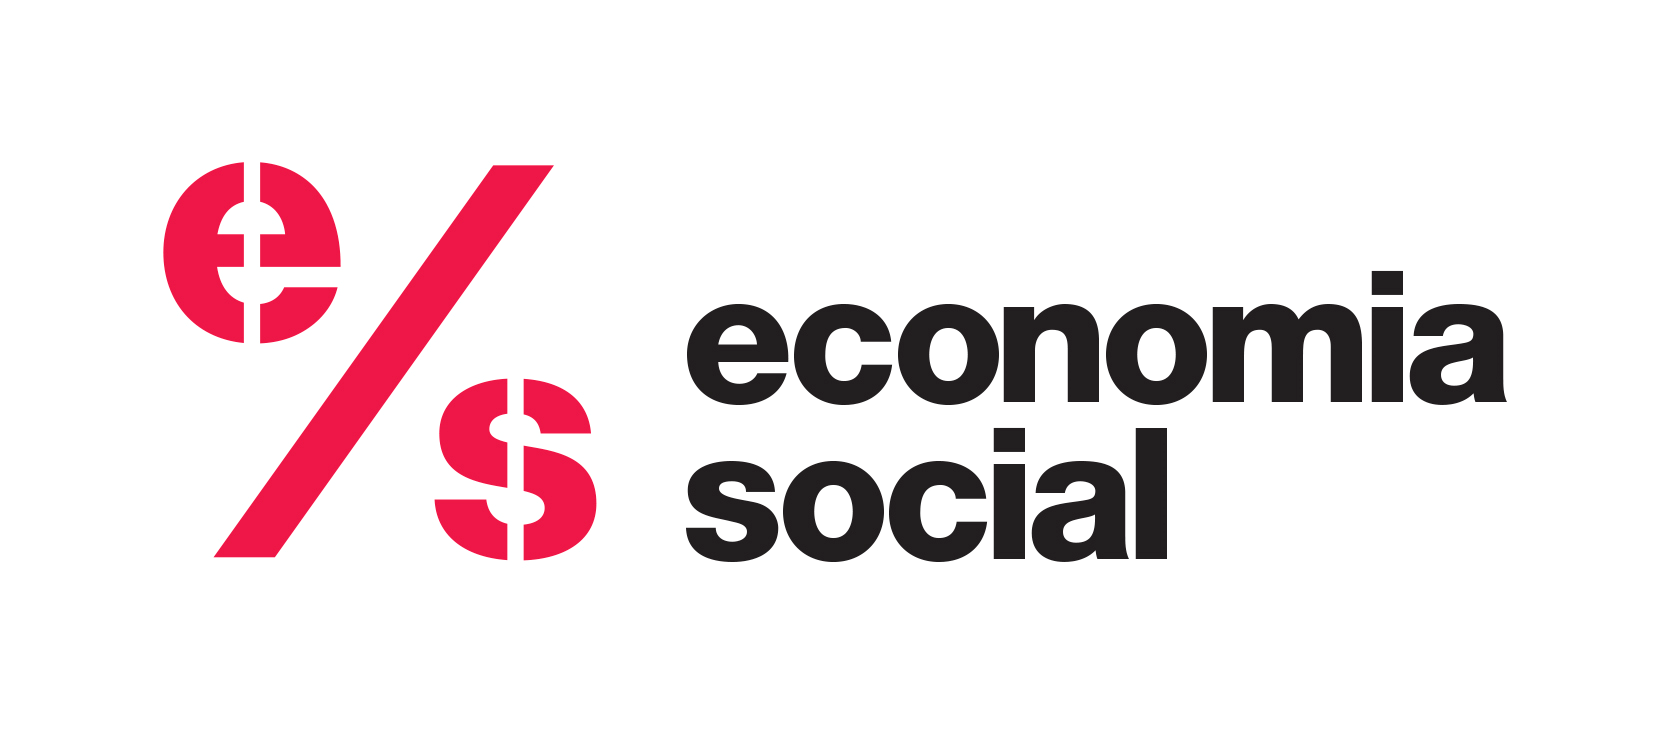 Economia Social